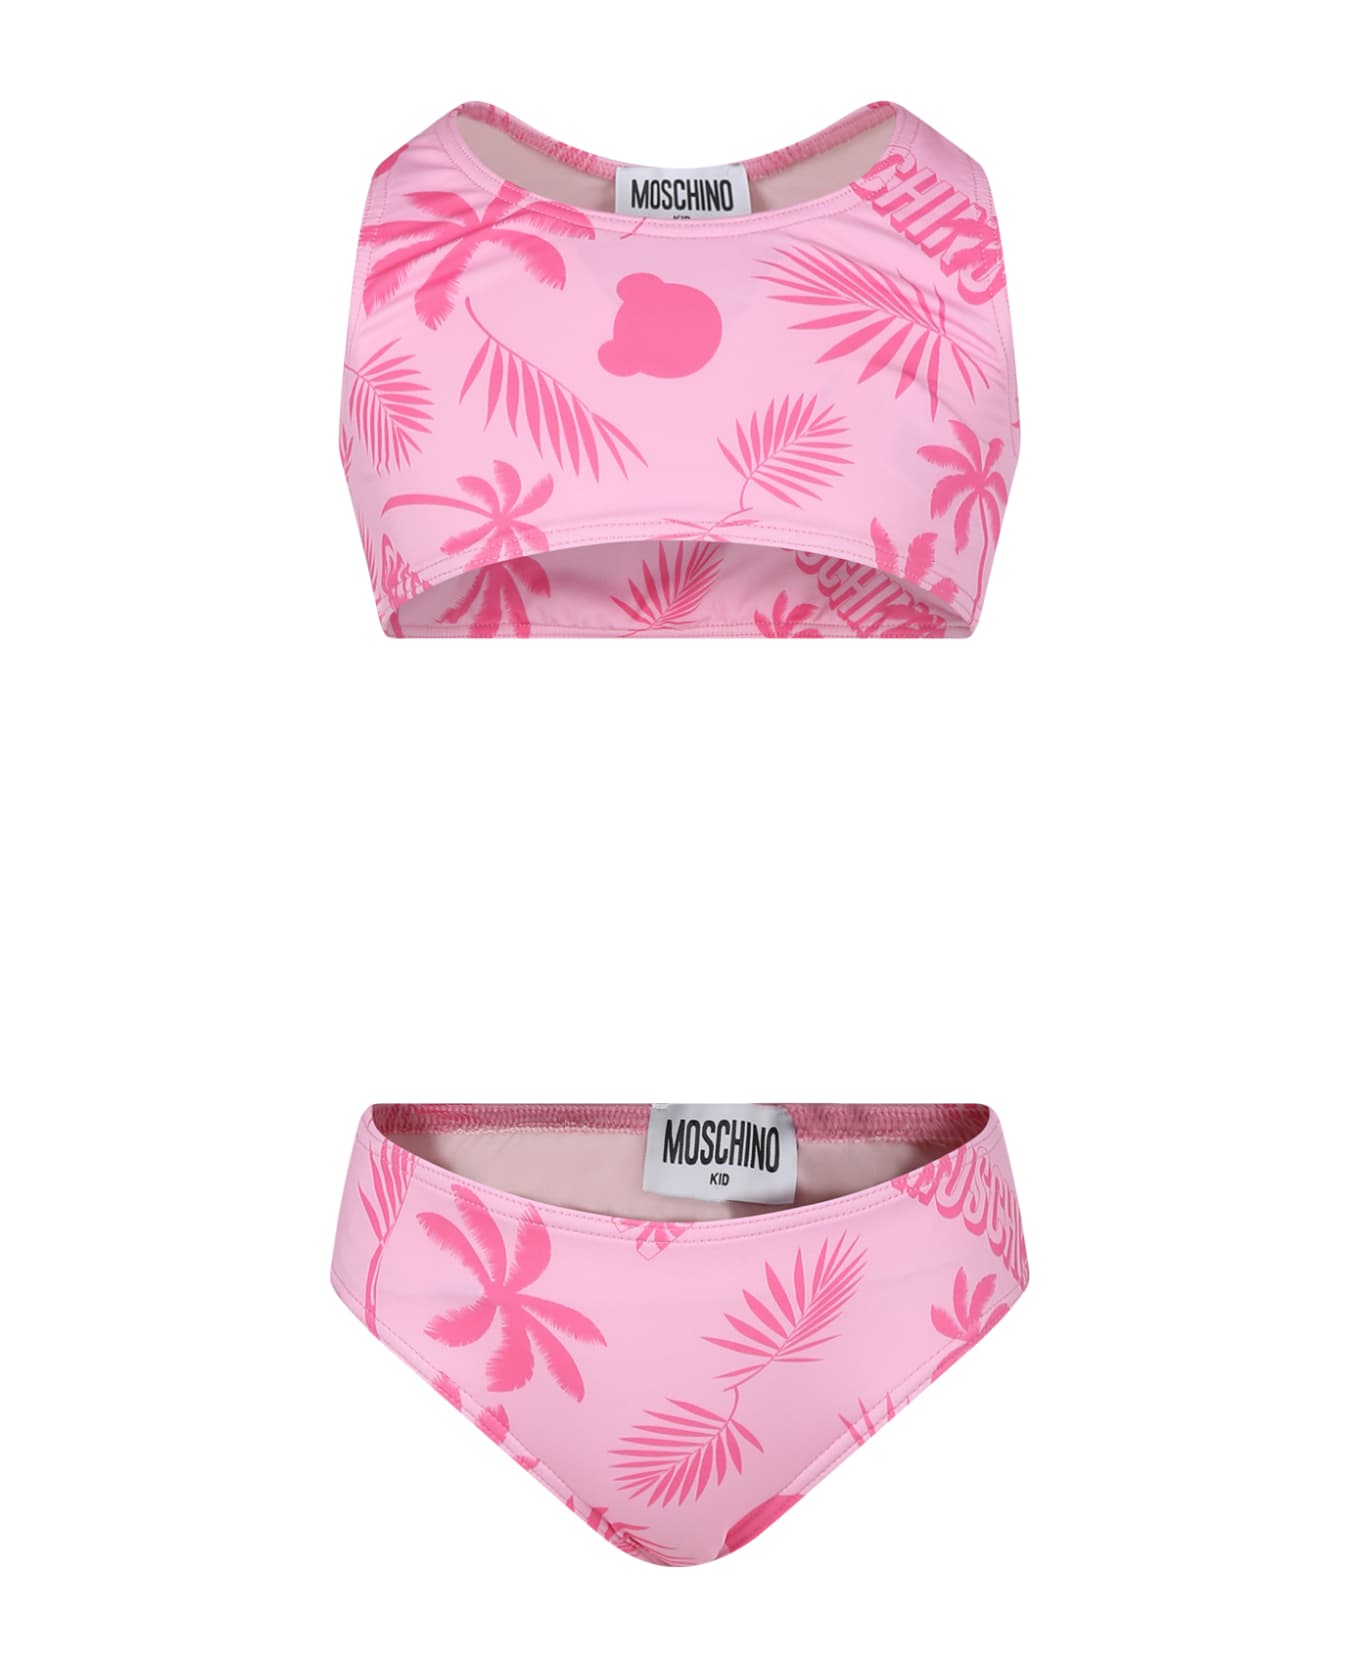 Moschino Pink Bikini For Girl With Teddy Bear And Palm Tree - Pink